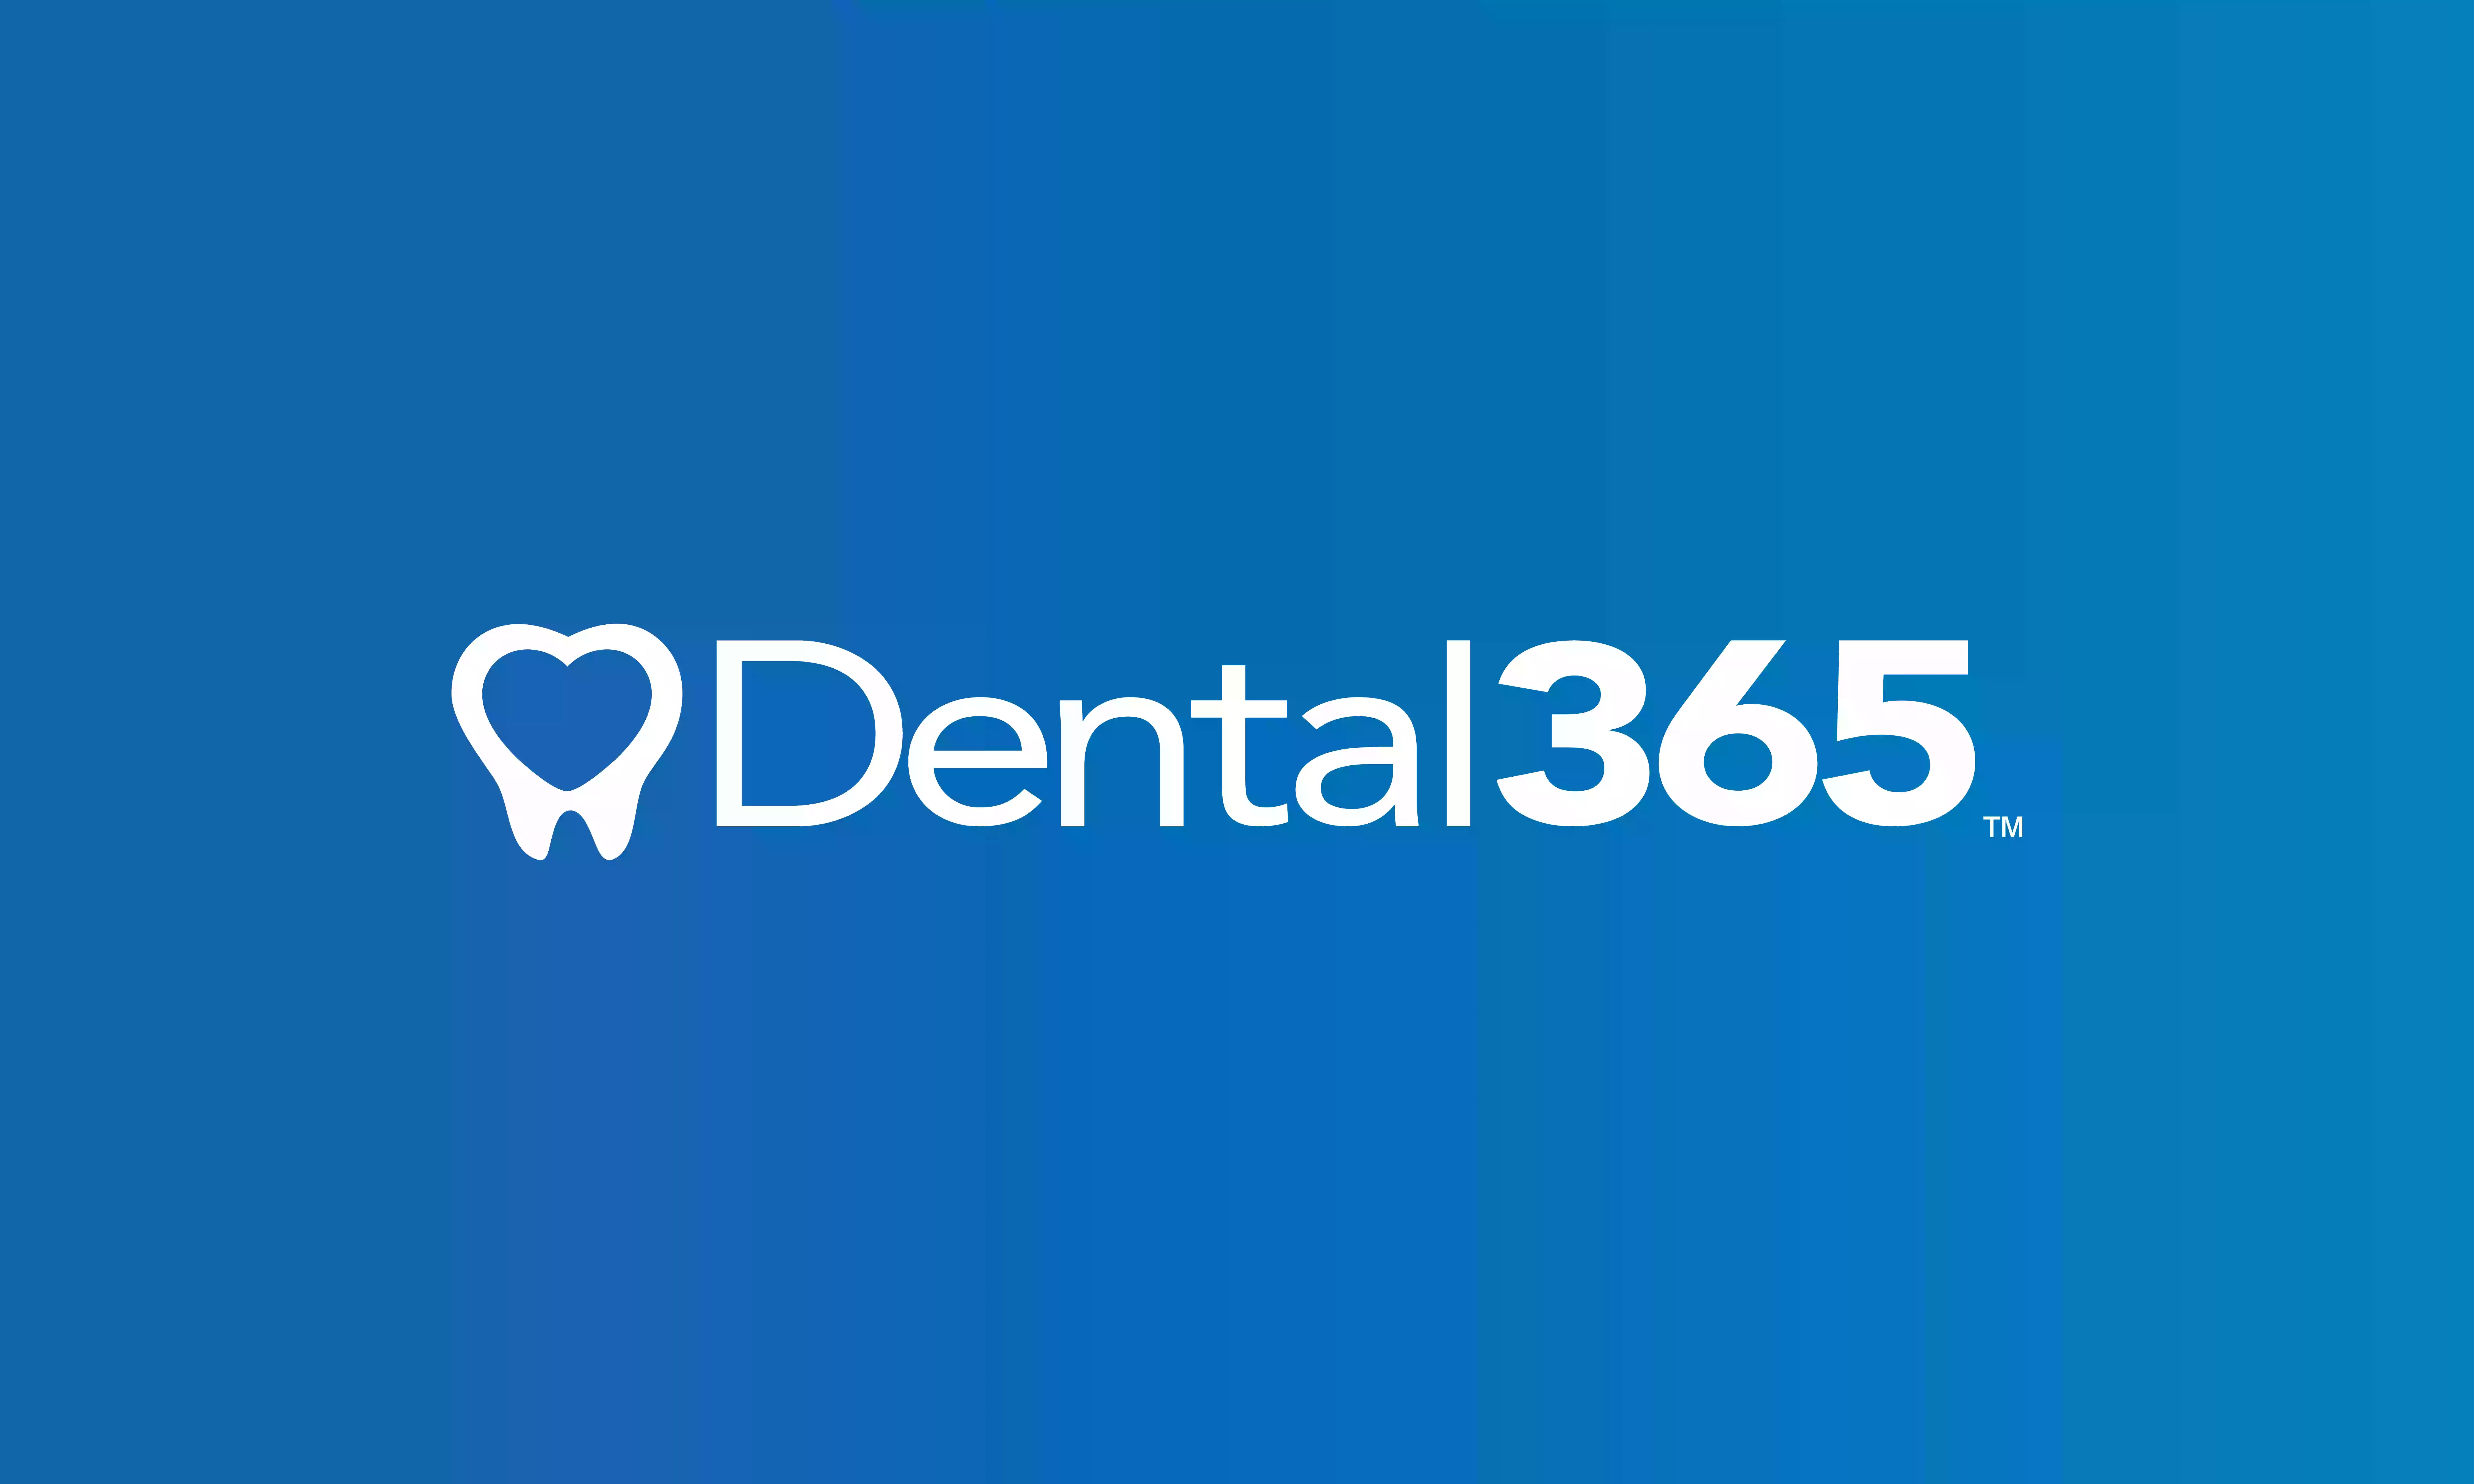 Stephen T. Deehan, DMD - A Dental365 Company